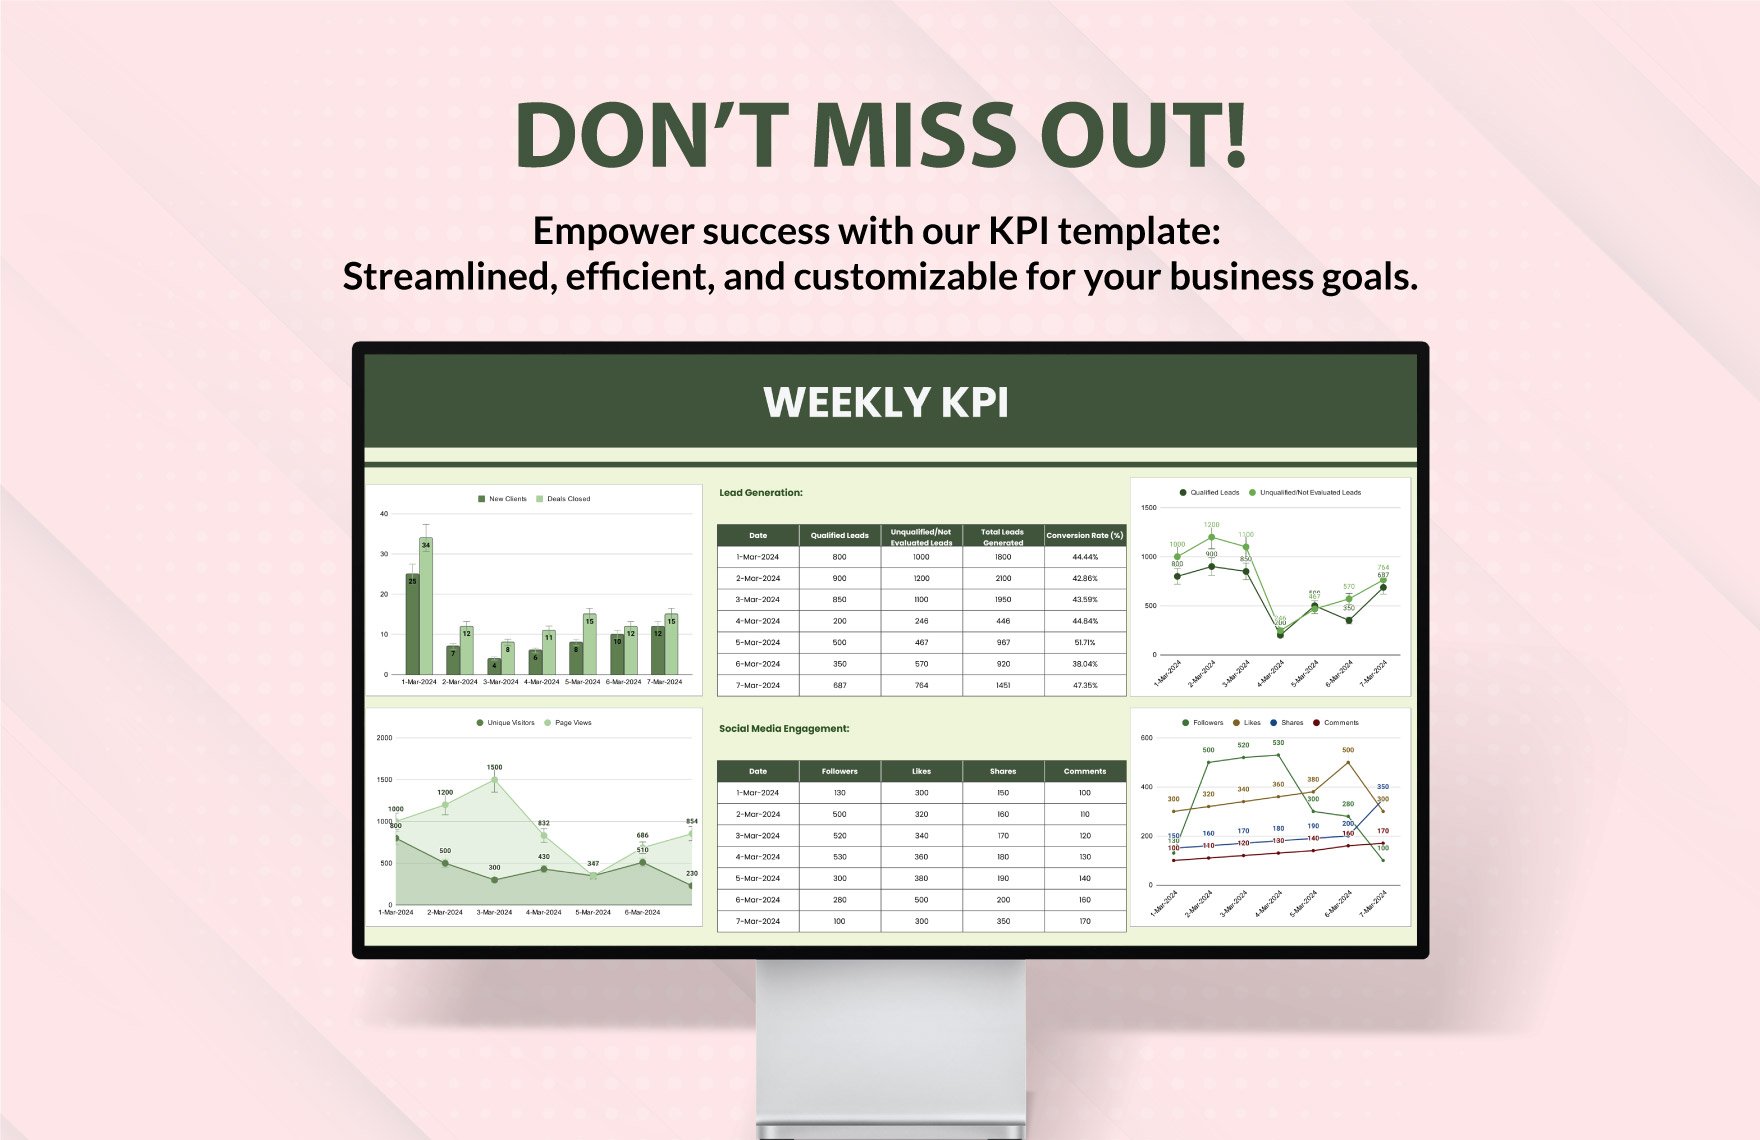 Weekly KPI Template